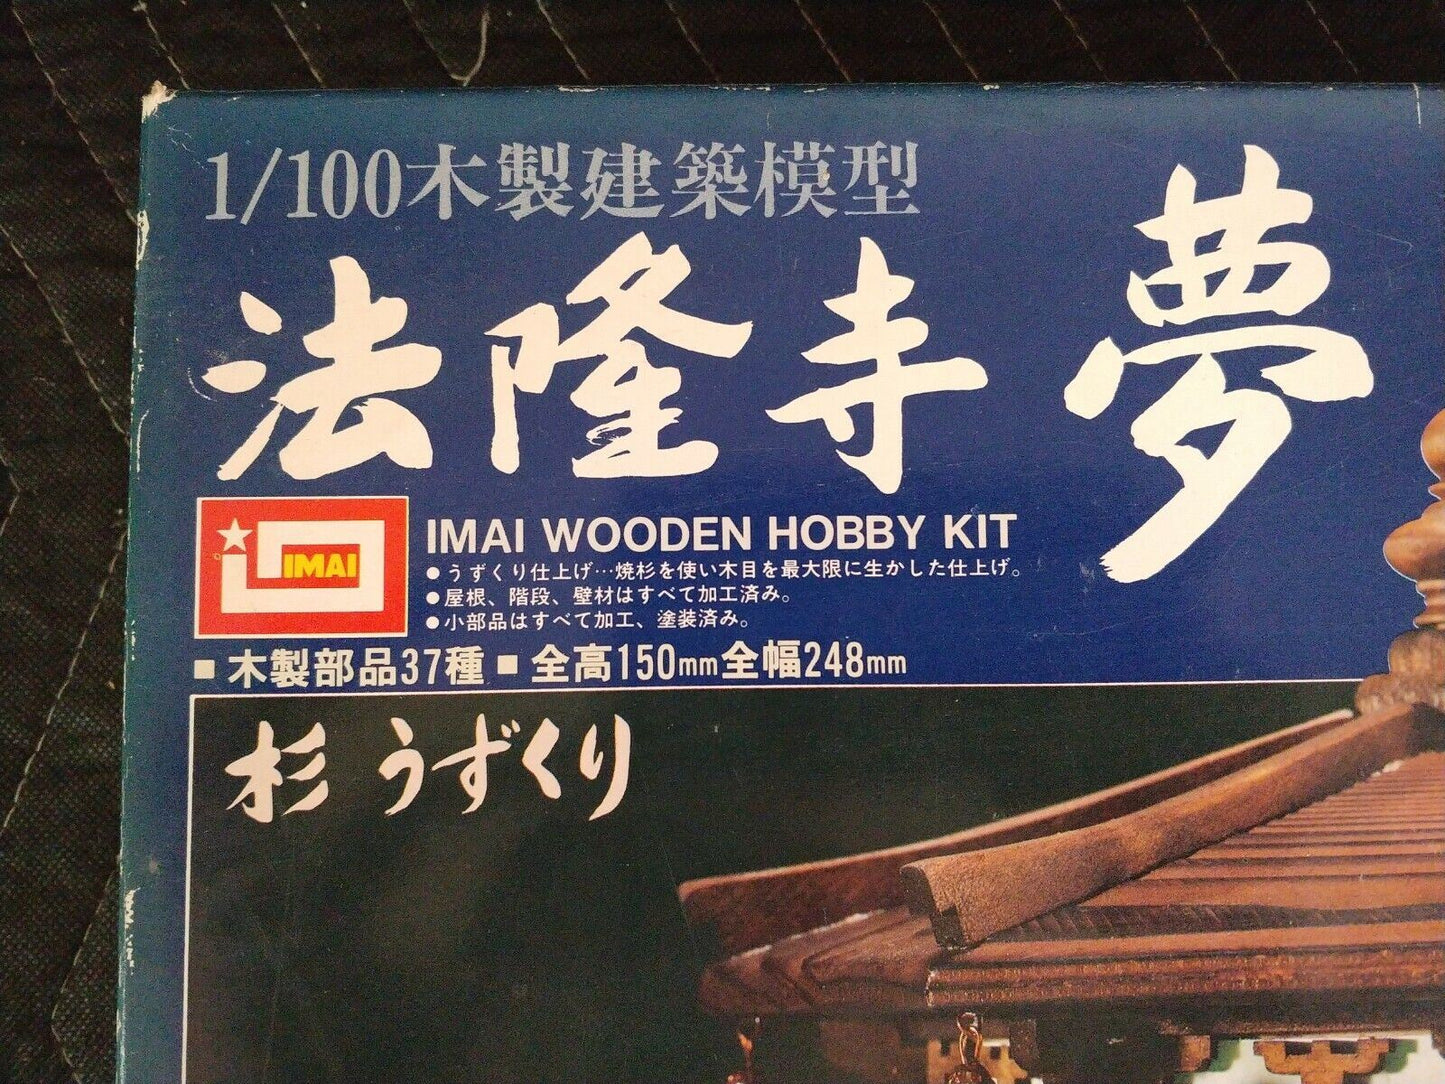 Vintage IMAI Wooden Hobby Kit - 1/100 scale model circa 1980 - NOS - NEW Unbuilt